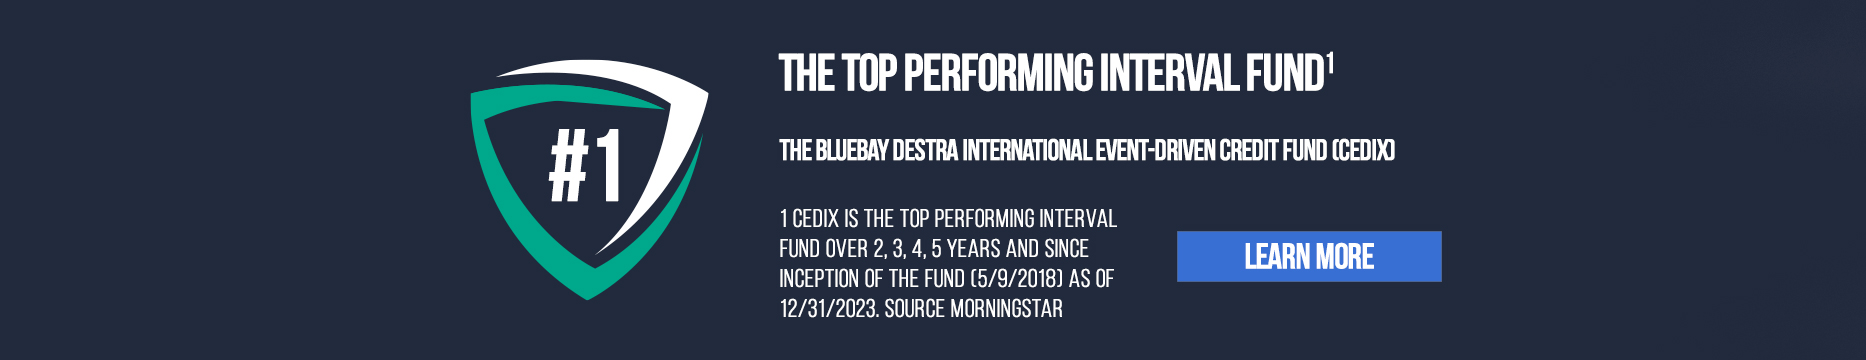 Top-Performing-Interval-Fund-Promo.jpg